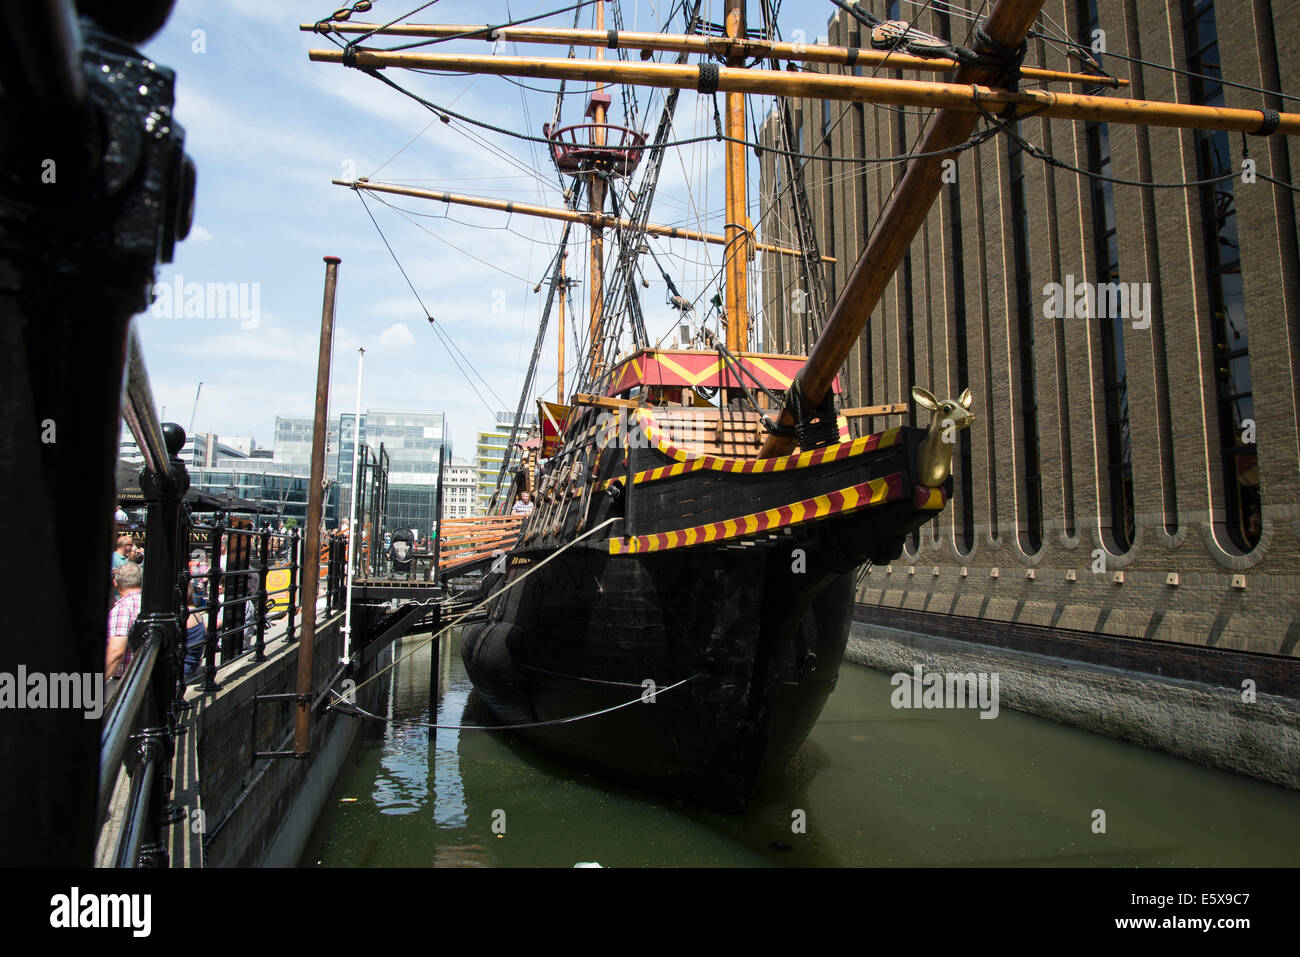 Replica of the Golden Hind, Elizabethan ship of Sir Francis Drake. Southwark, River Thames, London, UK Stock Photo